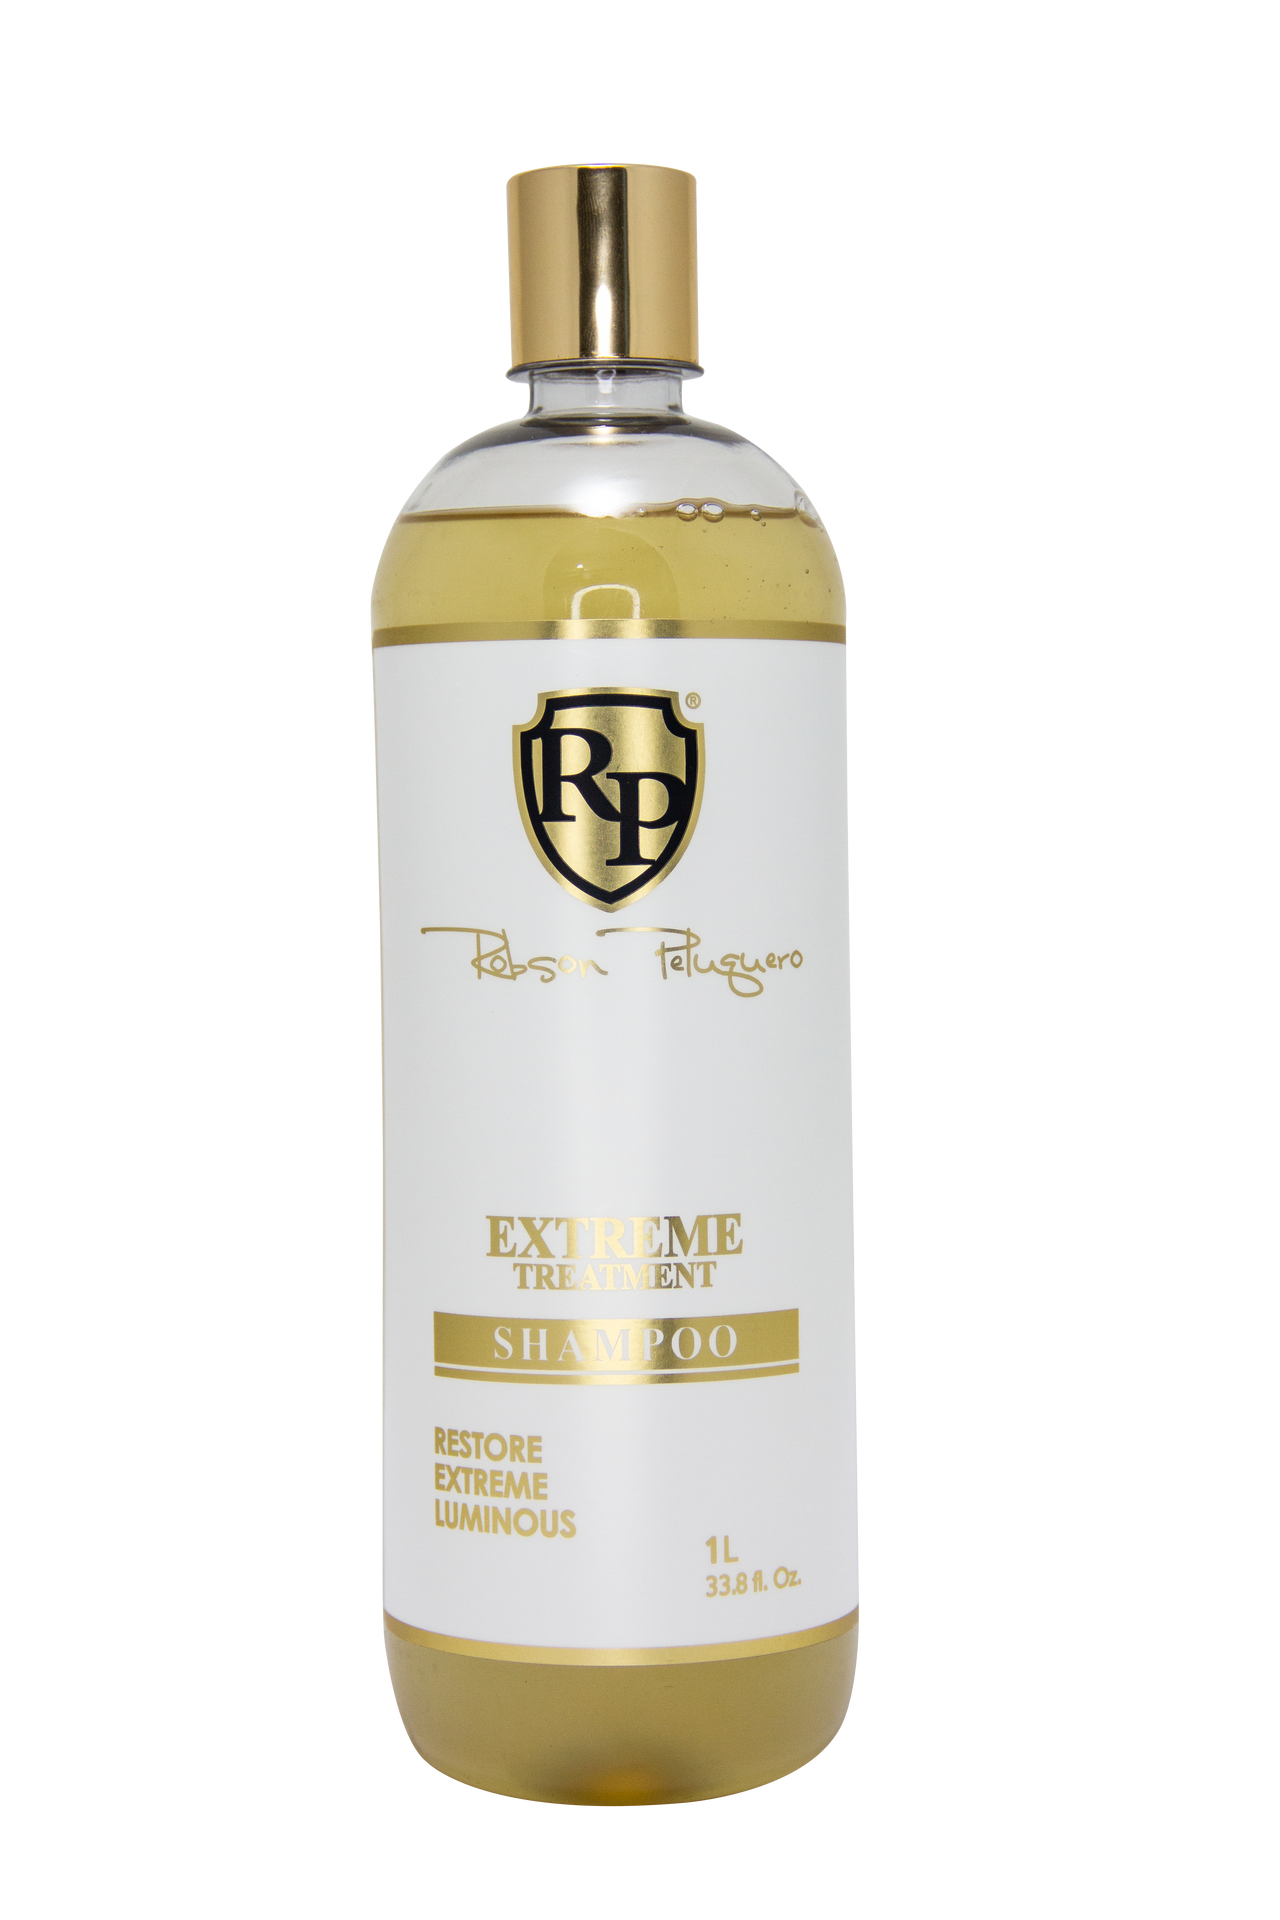 RP Extreme Shampoo - 1L